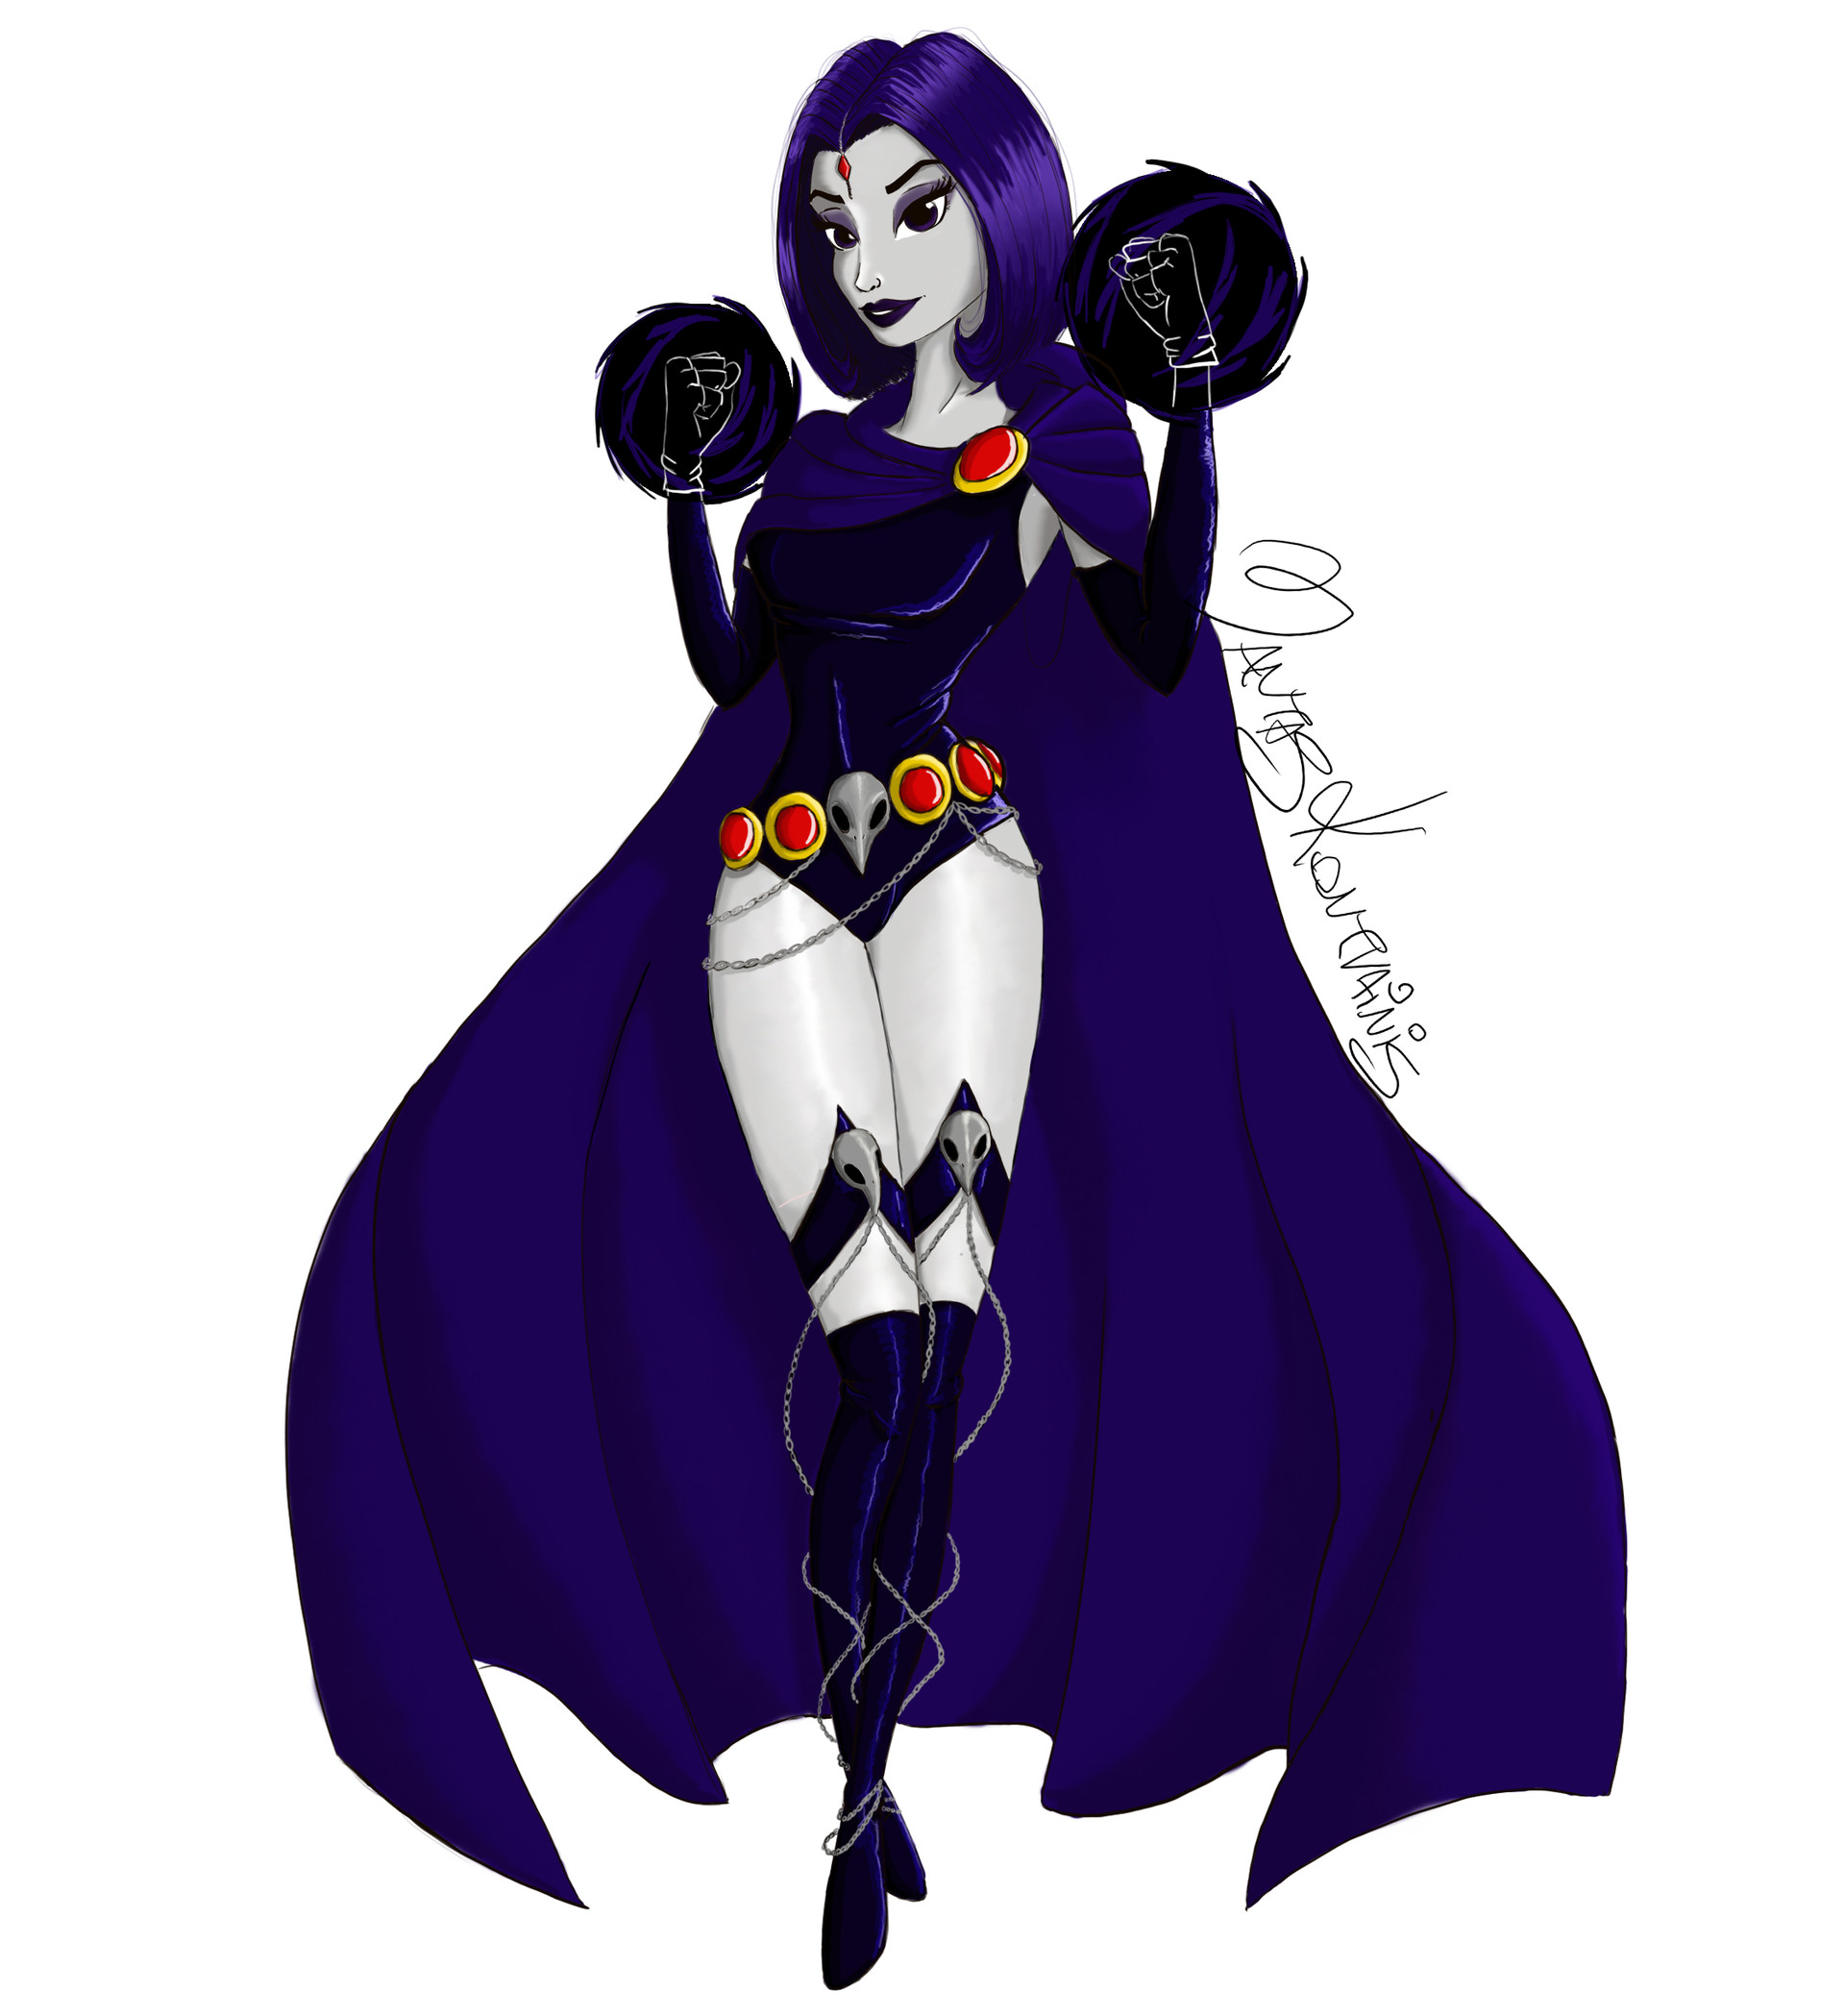 Mantas Kontvainis - Raven from Teen Titans